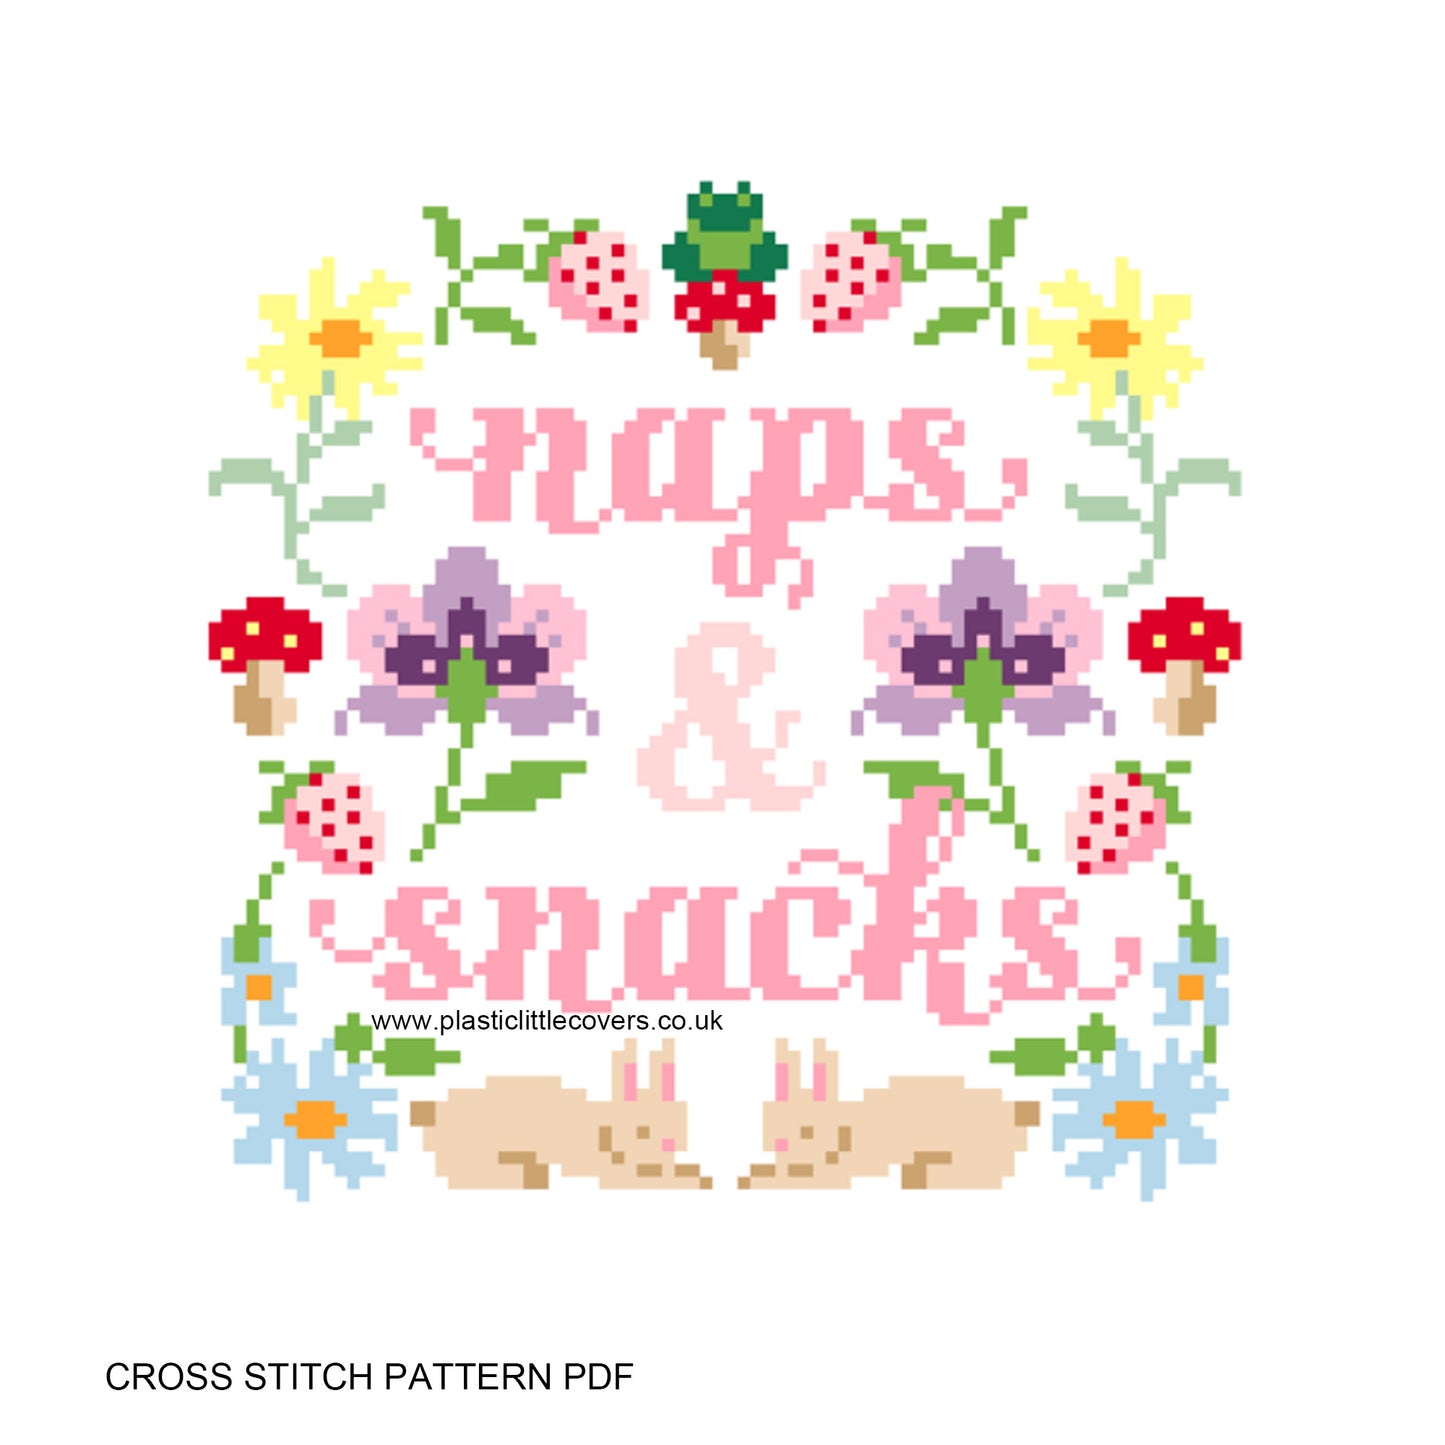 Naps & Snacks - Cross Stitch Pattern PDF.